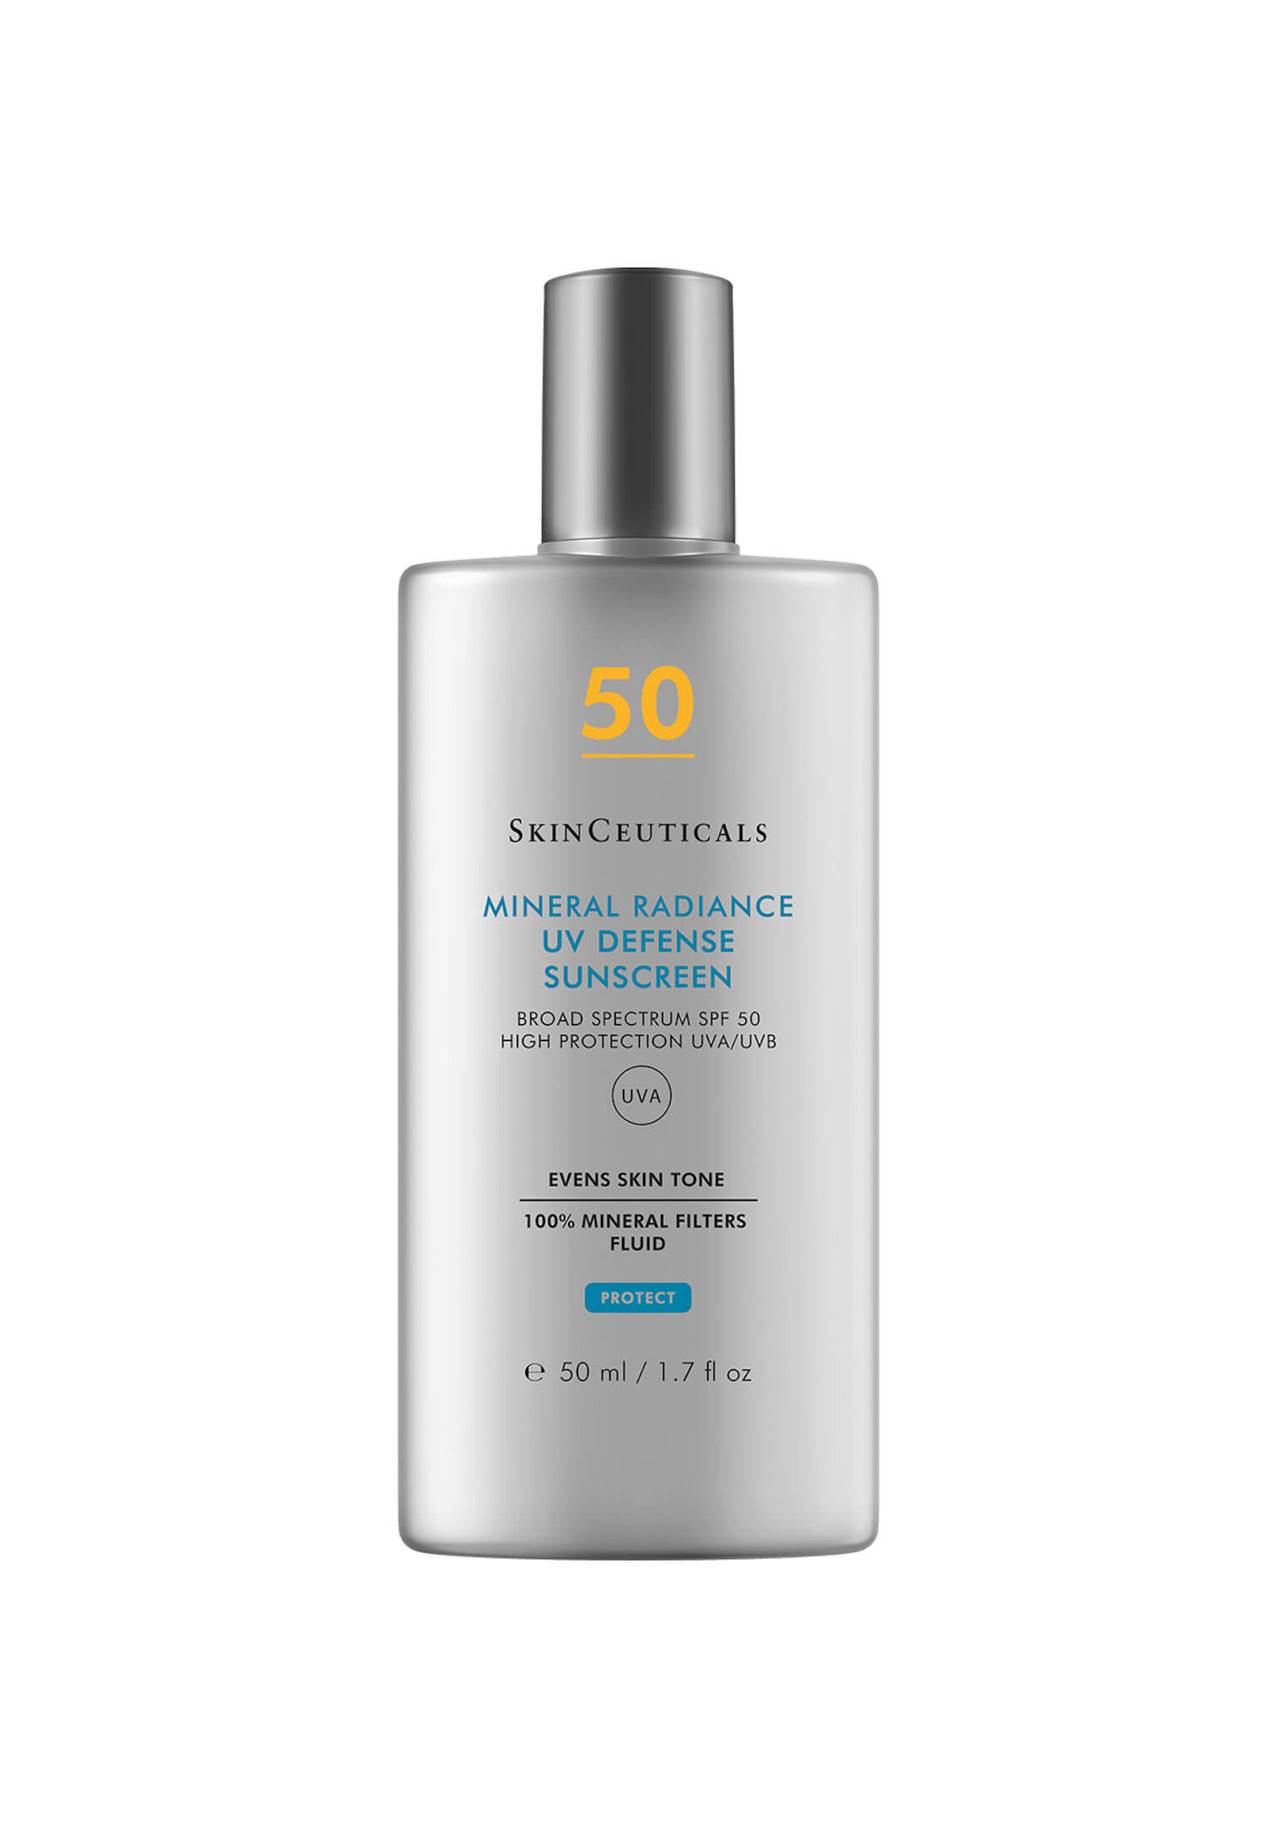 Cosmética piele sensible mujeres más de 40 años Protector solar Mineral Radiance UV Defense SPF 50 de SkinCeuticals